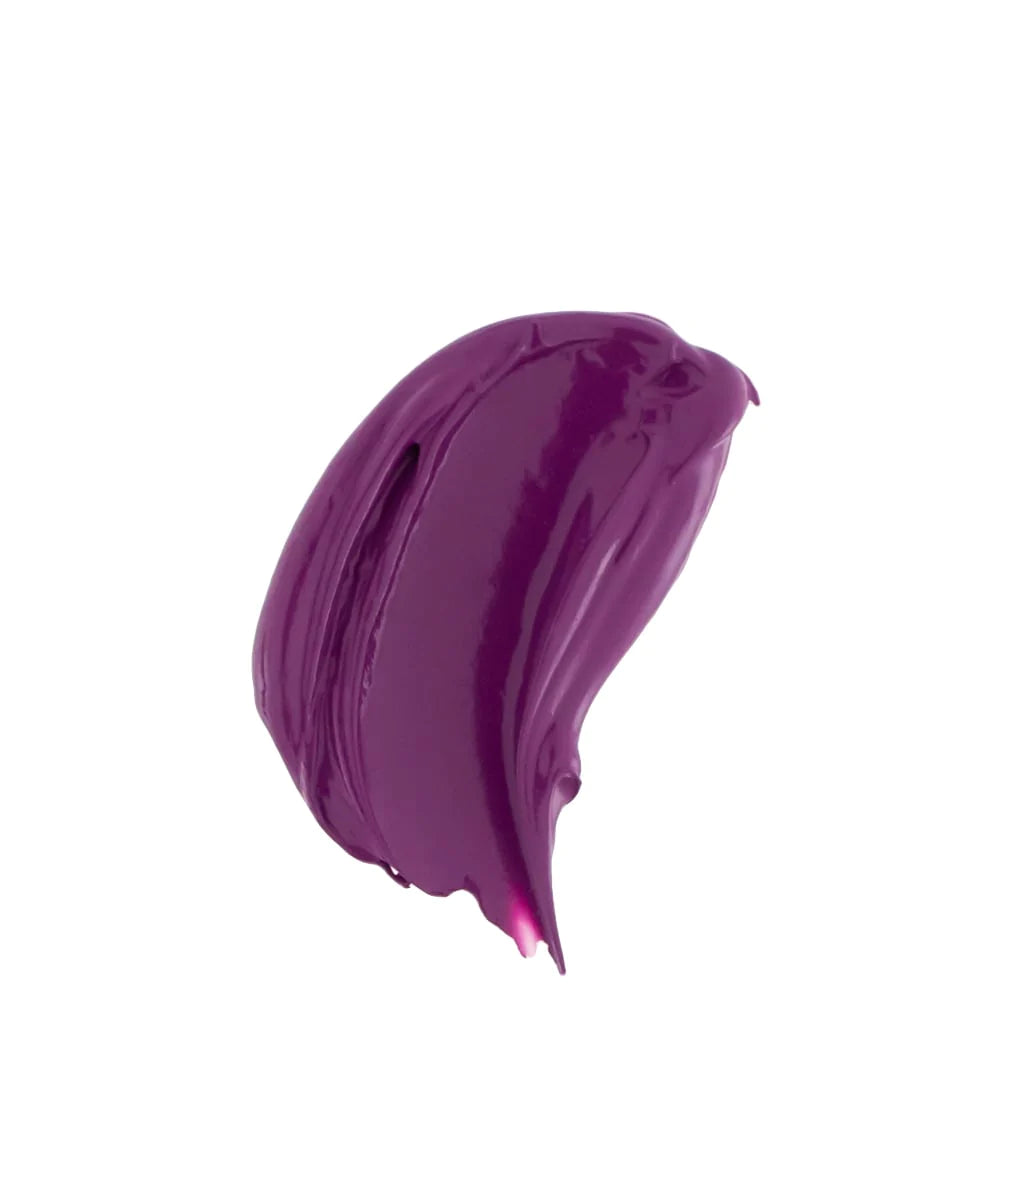 أحمر شفاه جرافتوبيان بيربل بنفسجى رقم 209 - أحمر شفاه جرافتوبيان بيربل بنفسجى رقم 209 Graftobian Cream Lipstick - Purple